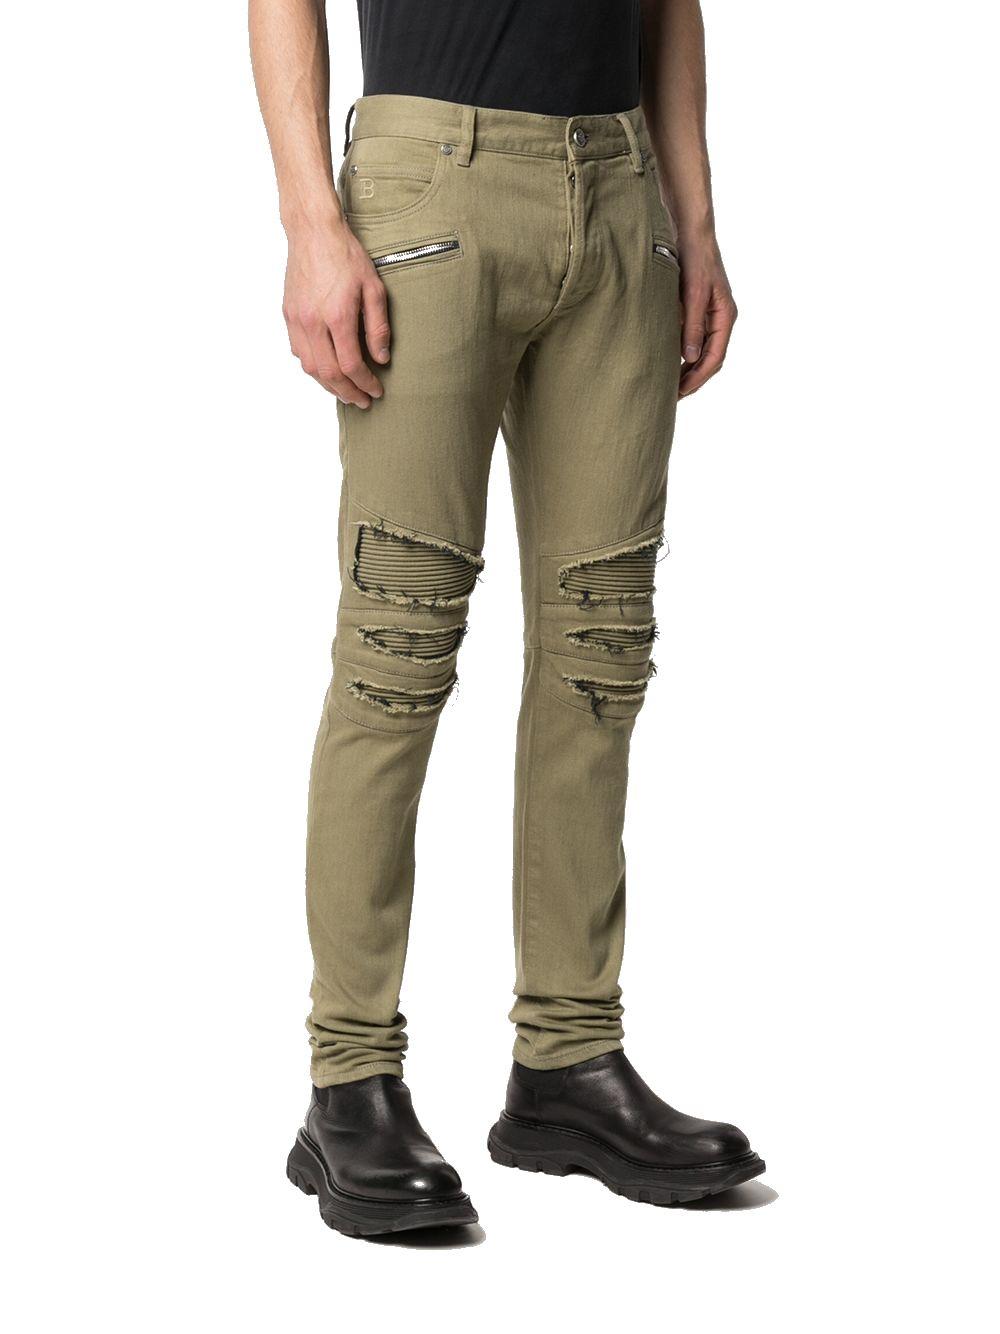 Balmain Cotton Jeans in Green for Men - Lyst